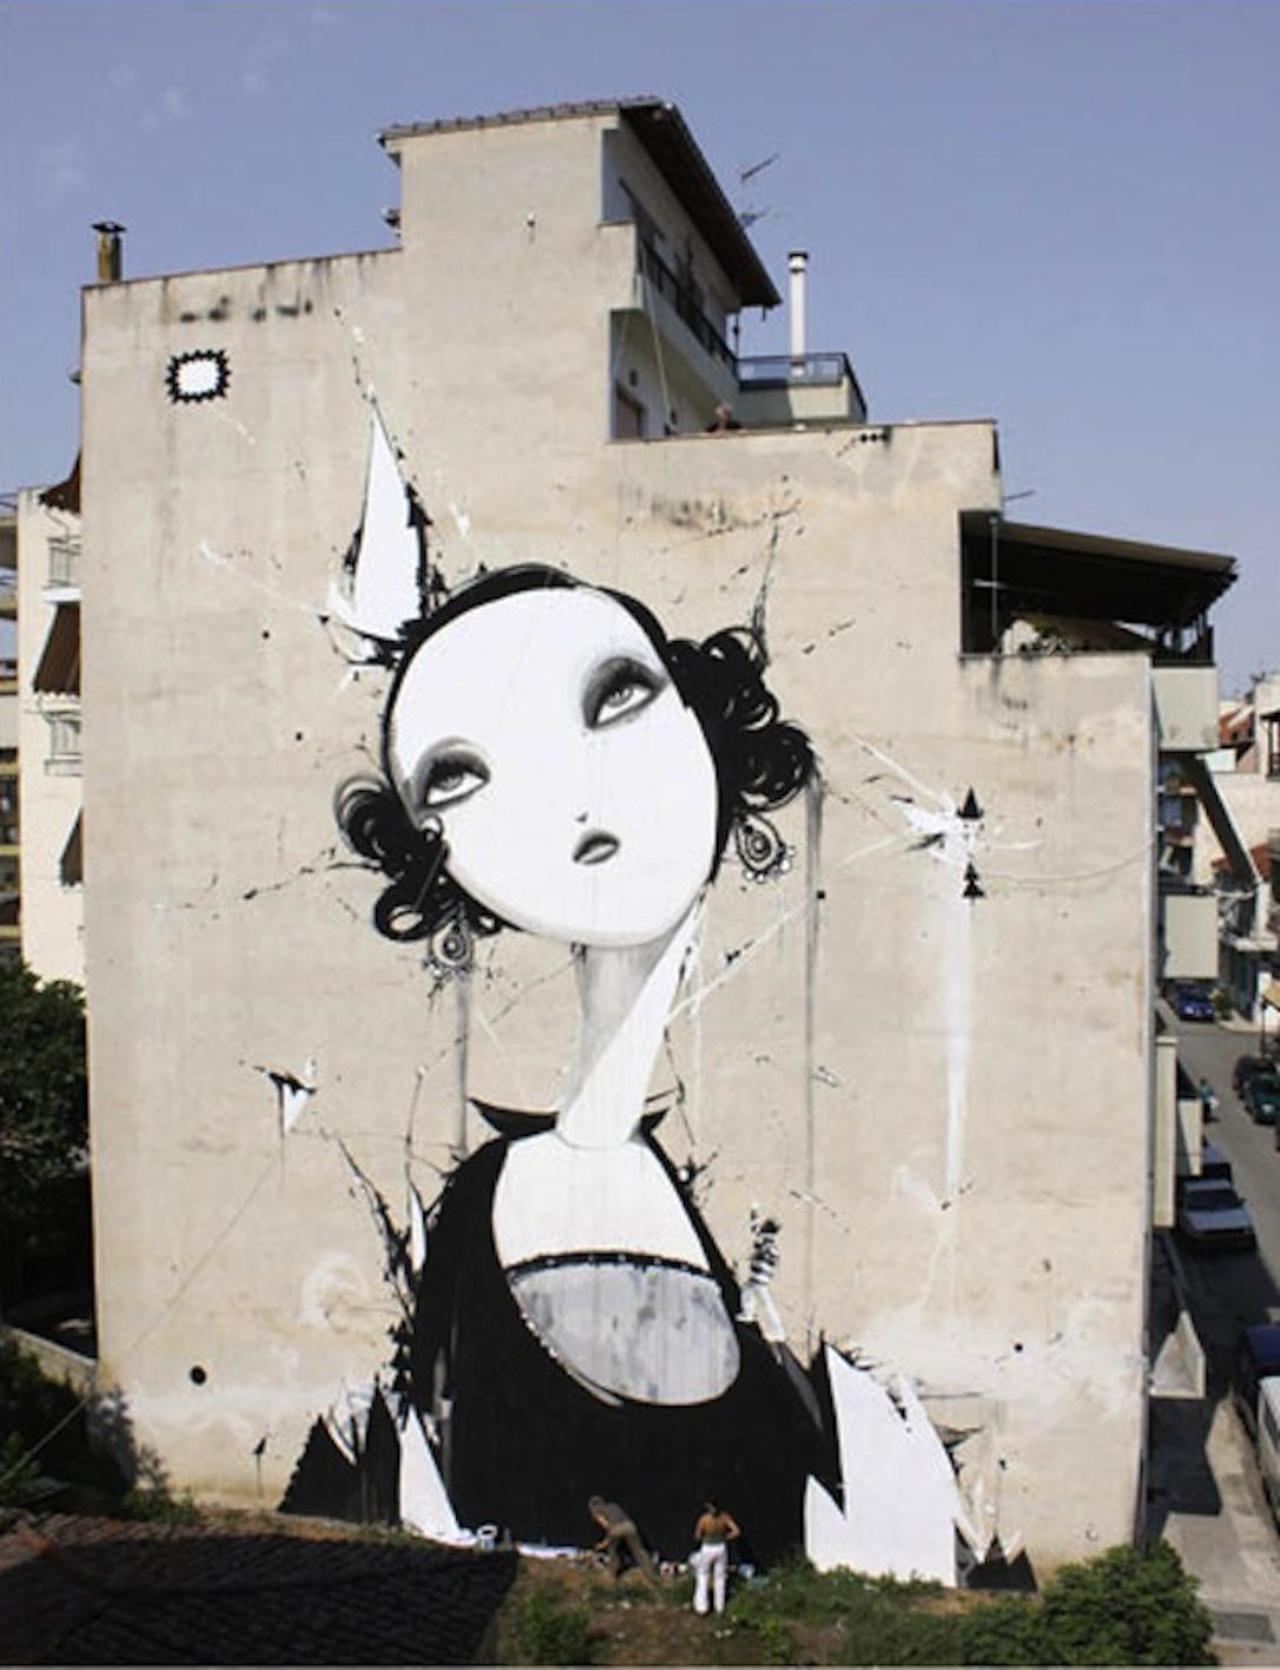 #Streetart #urbanart #graffiti #mural #peinture #acrylique de l'artiste Alexsandros Vasmoulakis, Athènes, Grèce http://t.co/xmPeEGMoFp